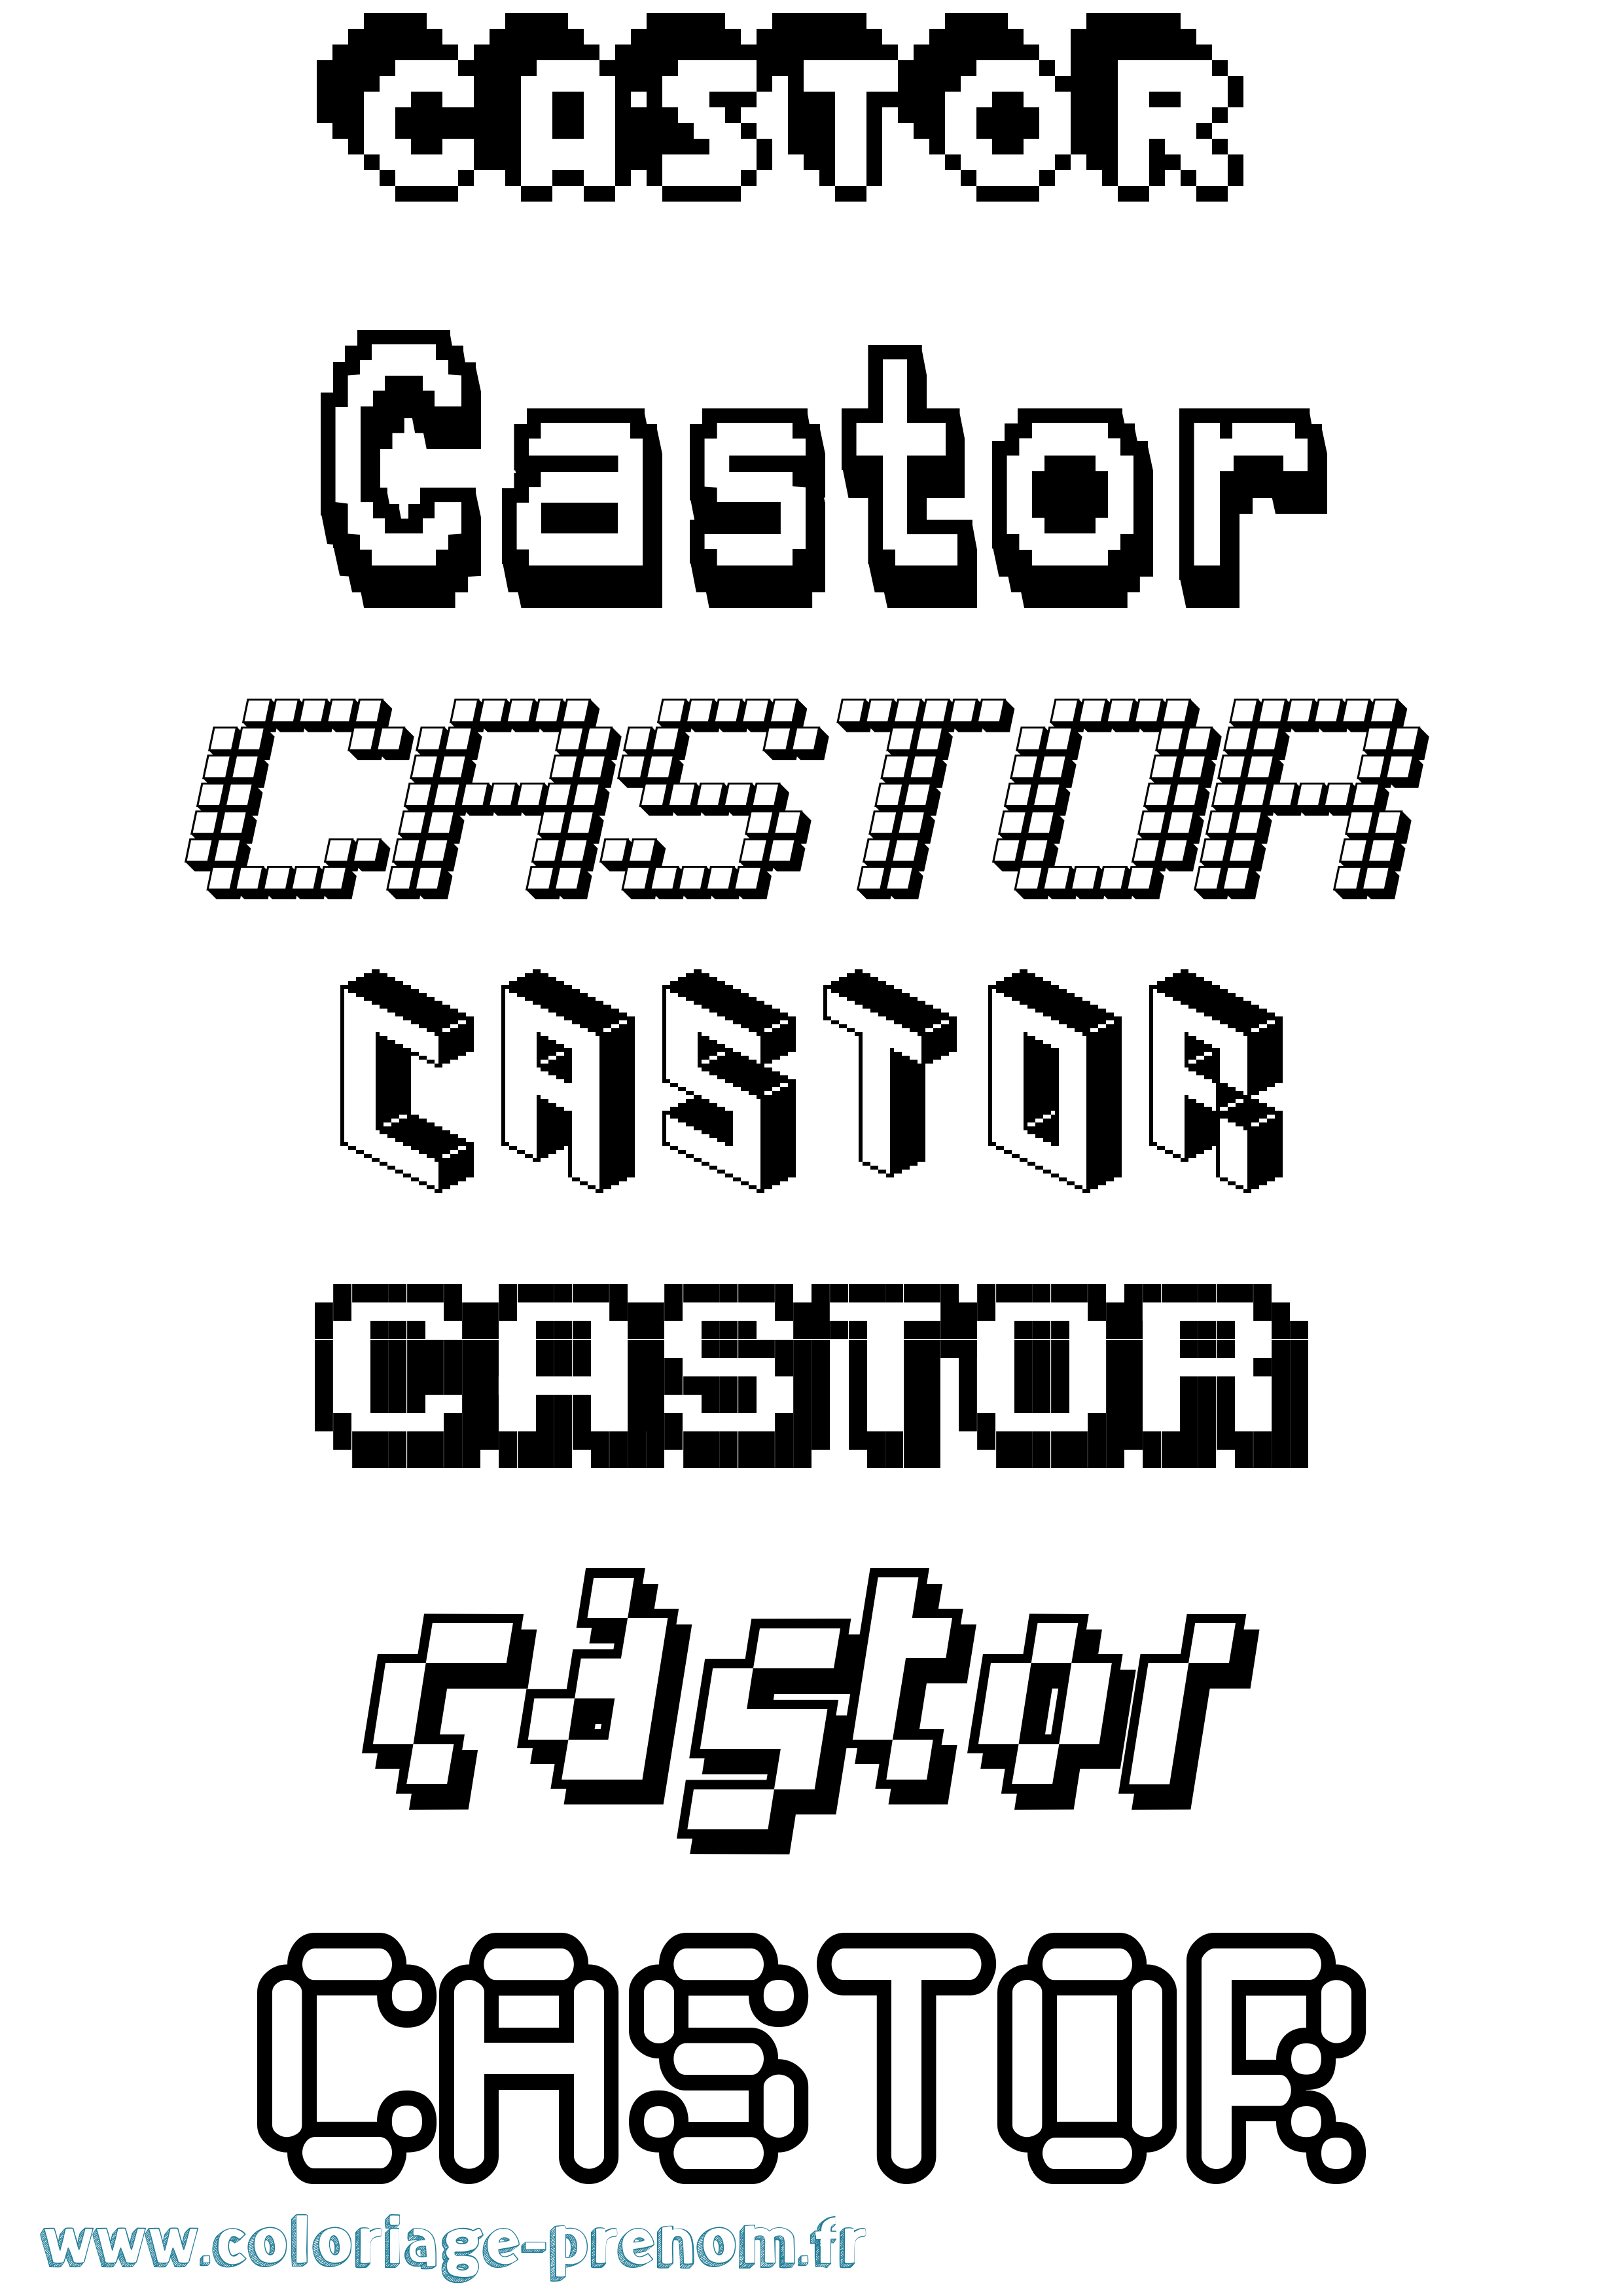 Coloriage prénom Castor Pixel